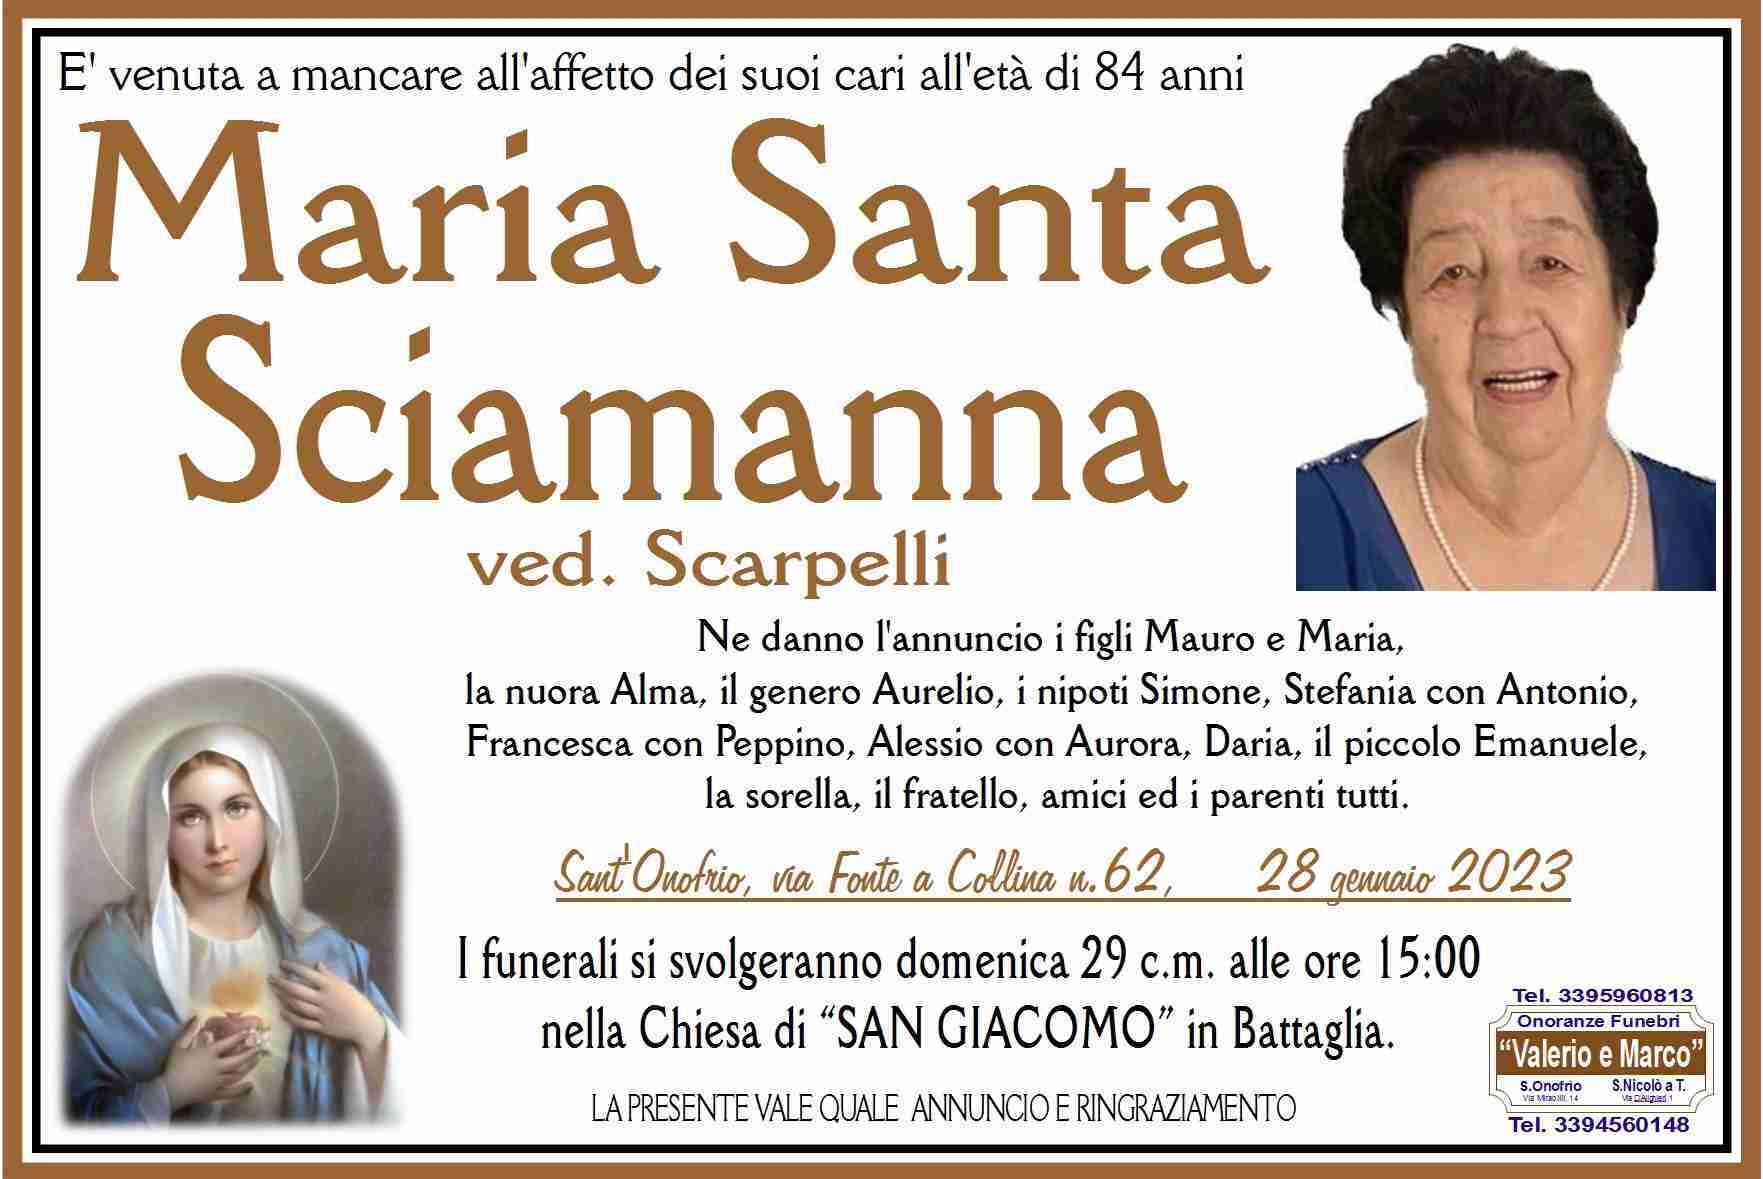 Maria Santa Sciamanna